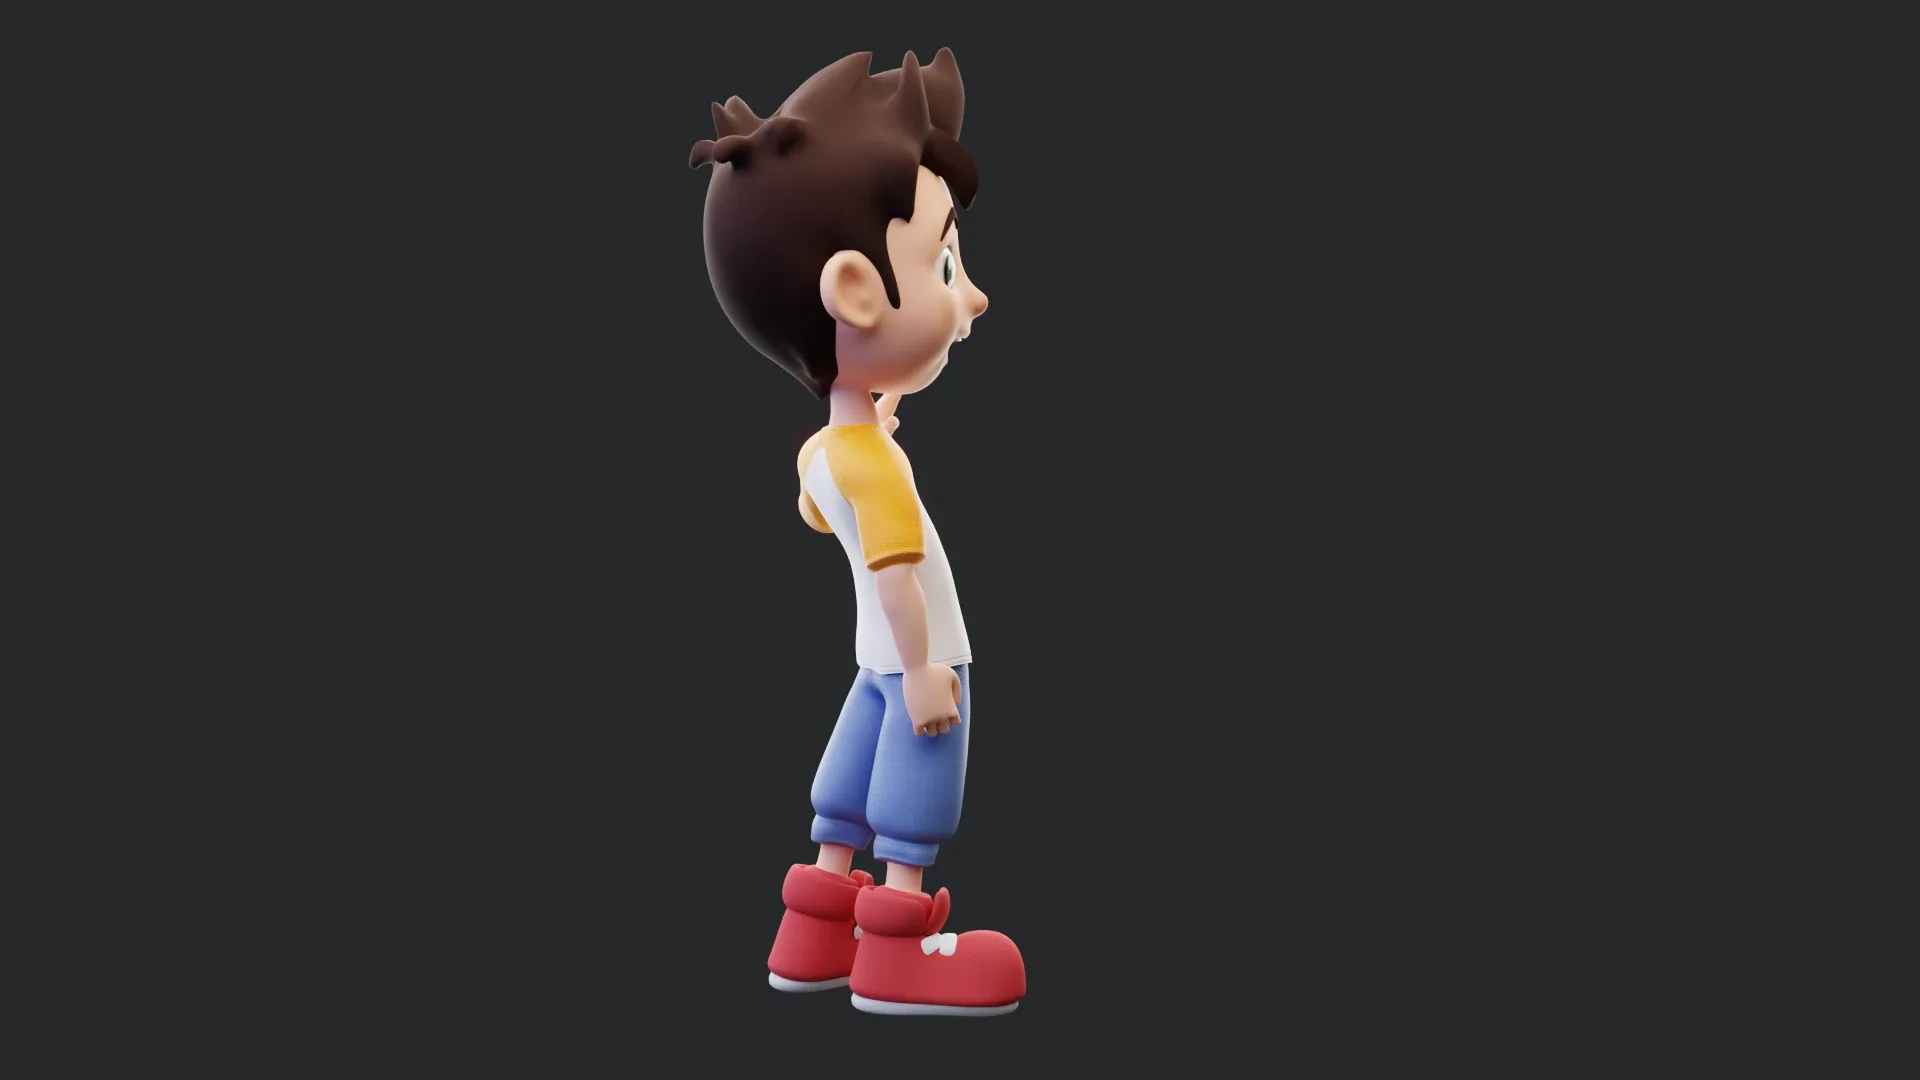 Boy - cartoon character rigged 3d model for Blender